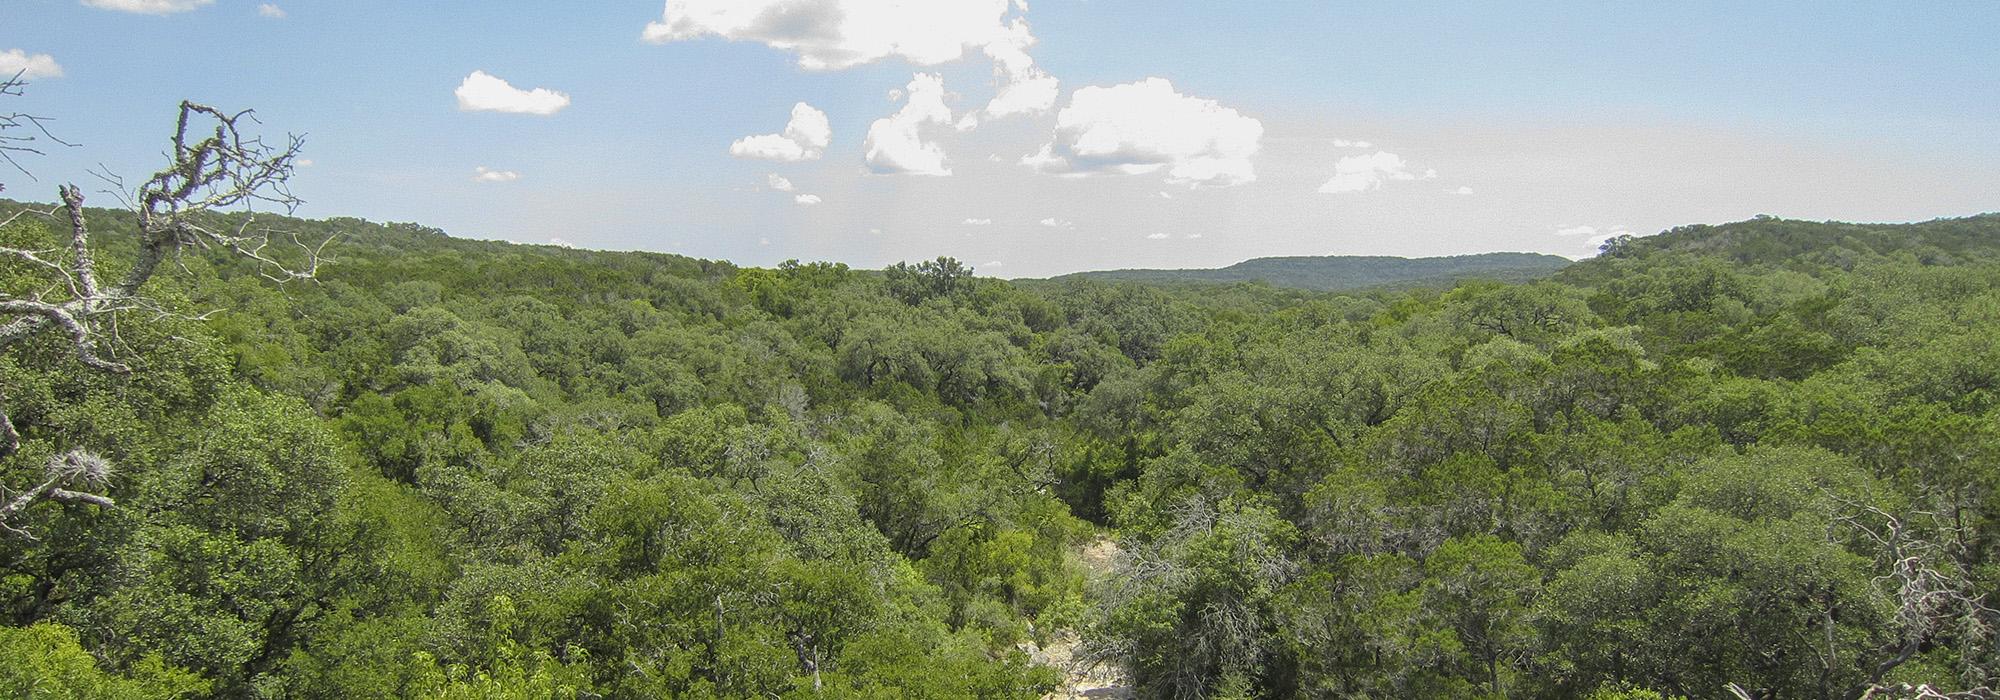 Government Canyon State Natural Area, San Antonio, TX